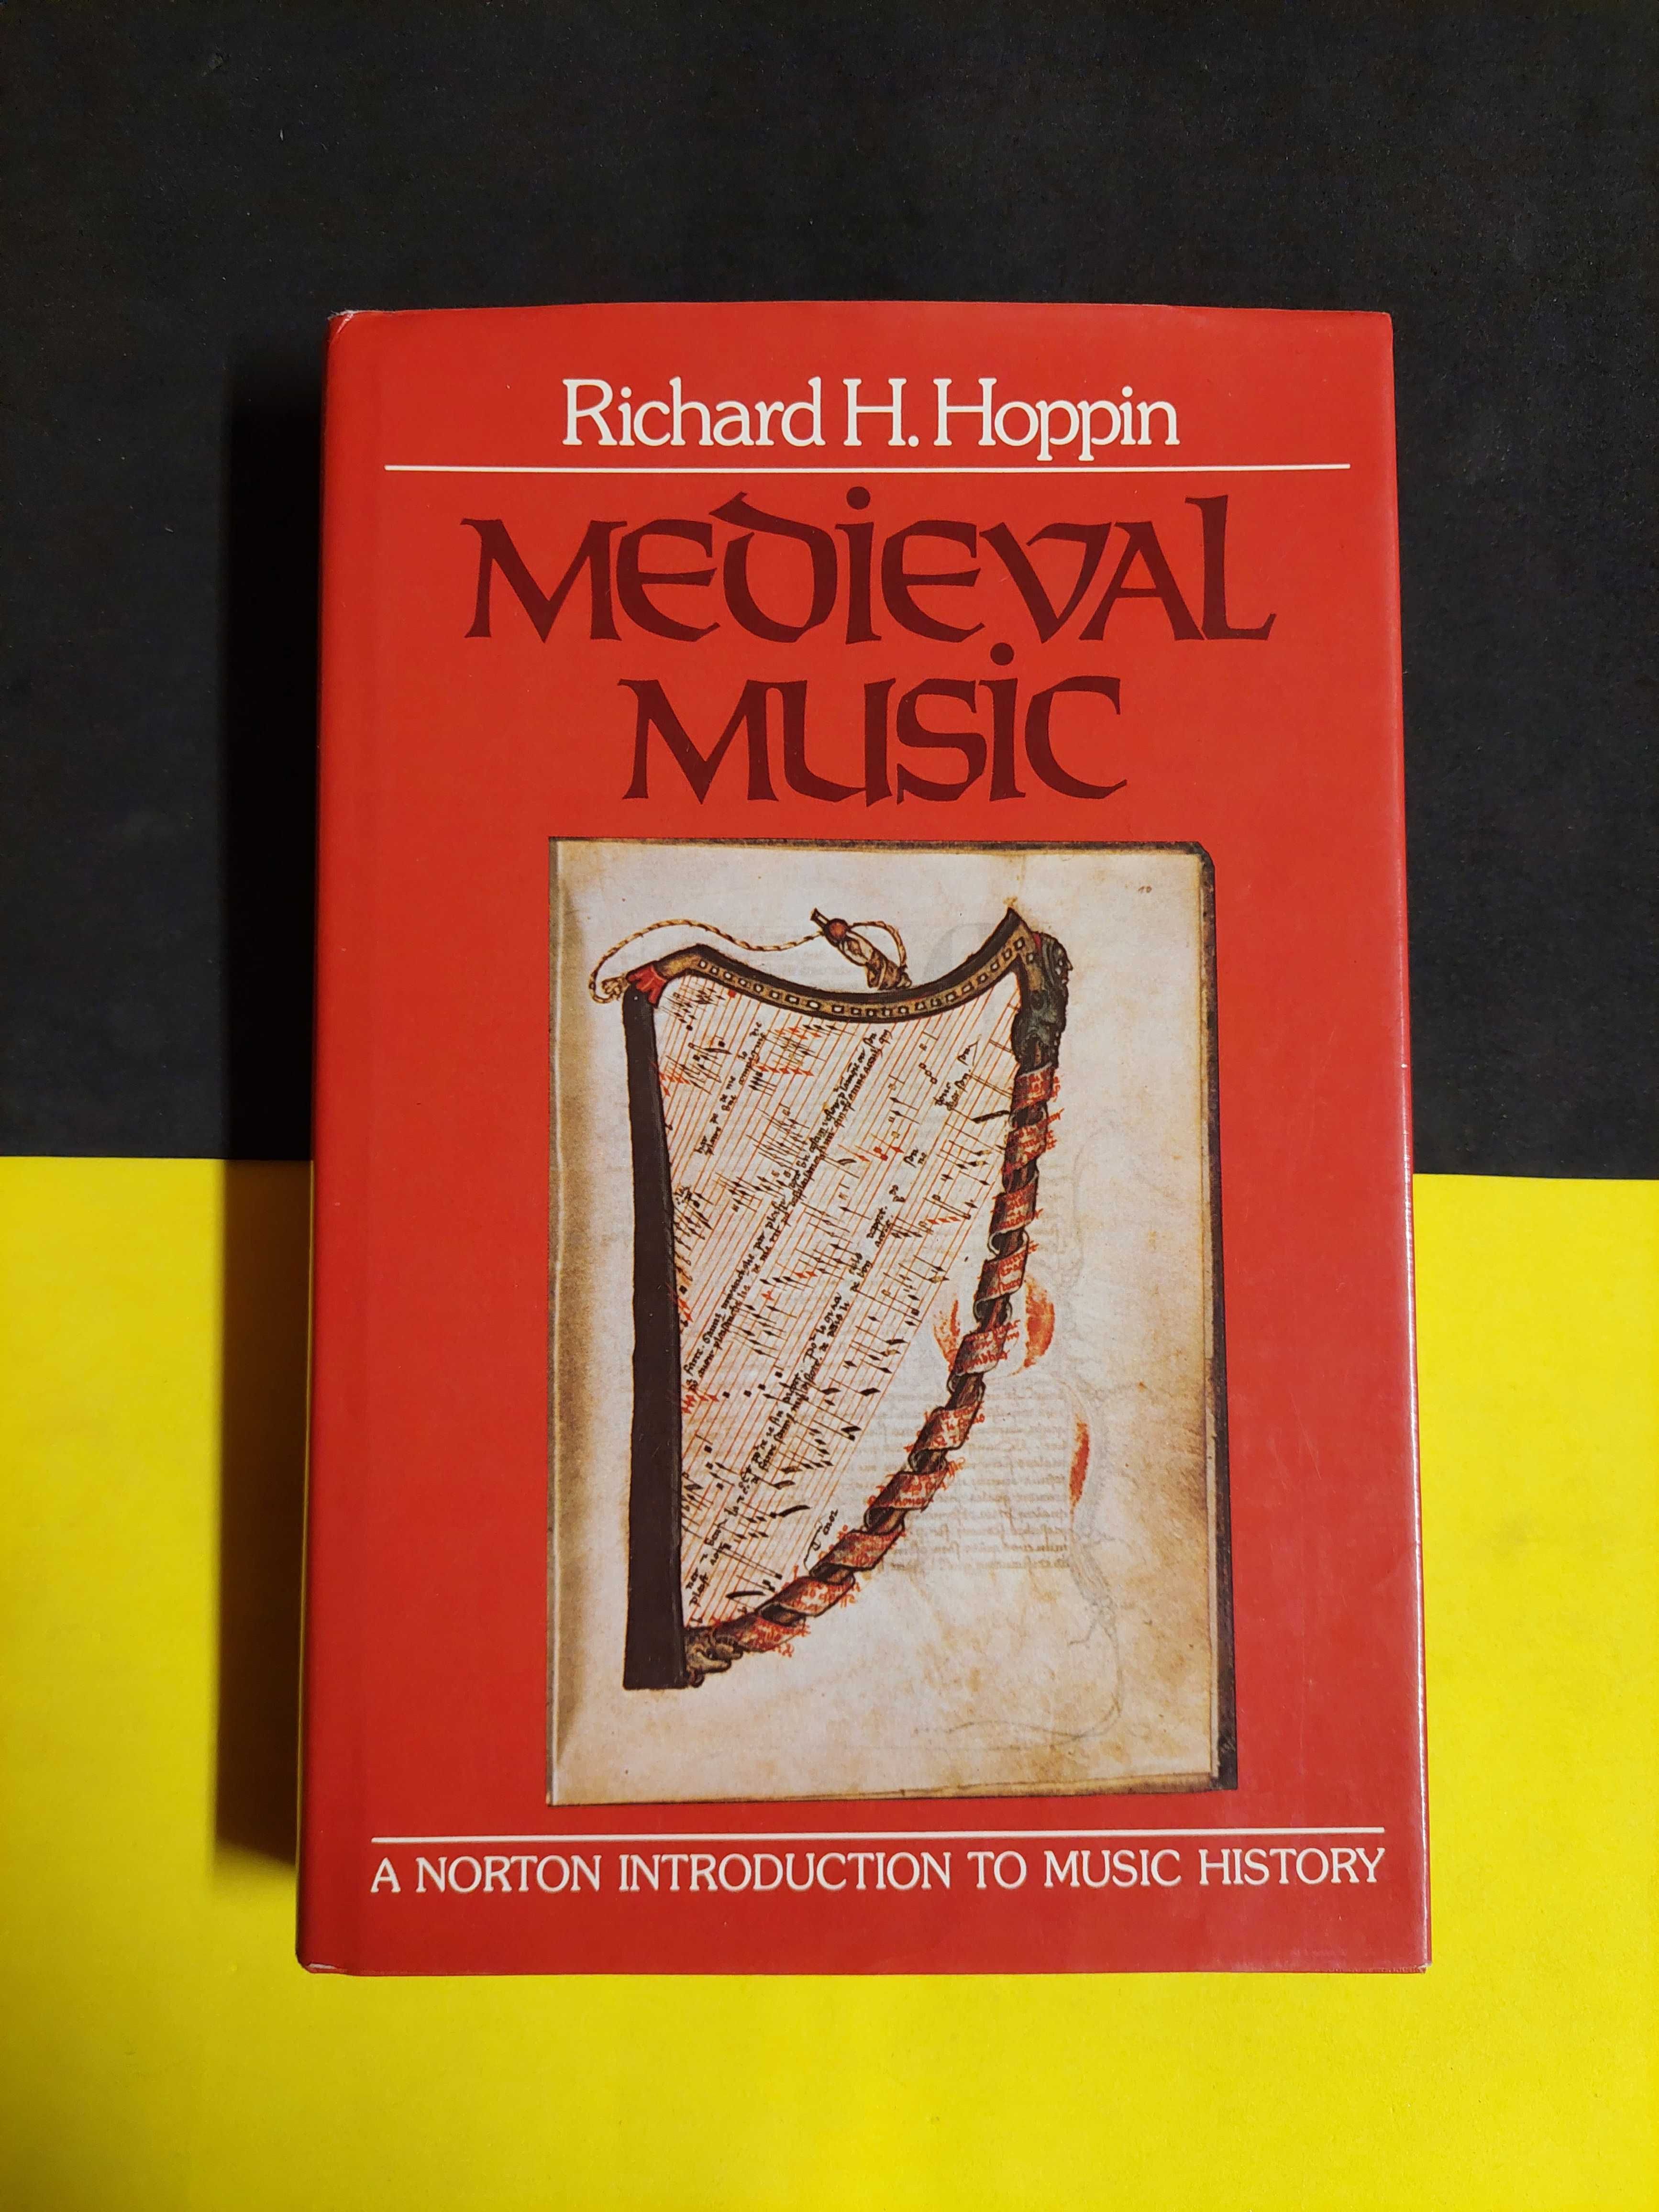 Richard H. Hoppin - Medieval Music